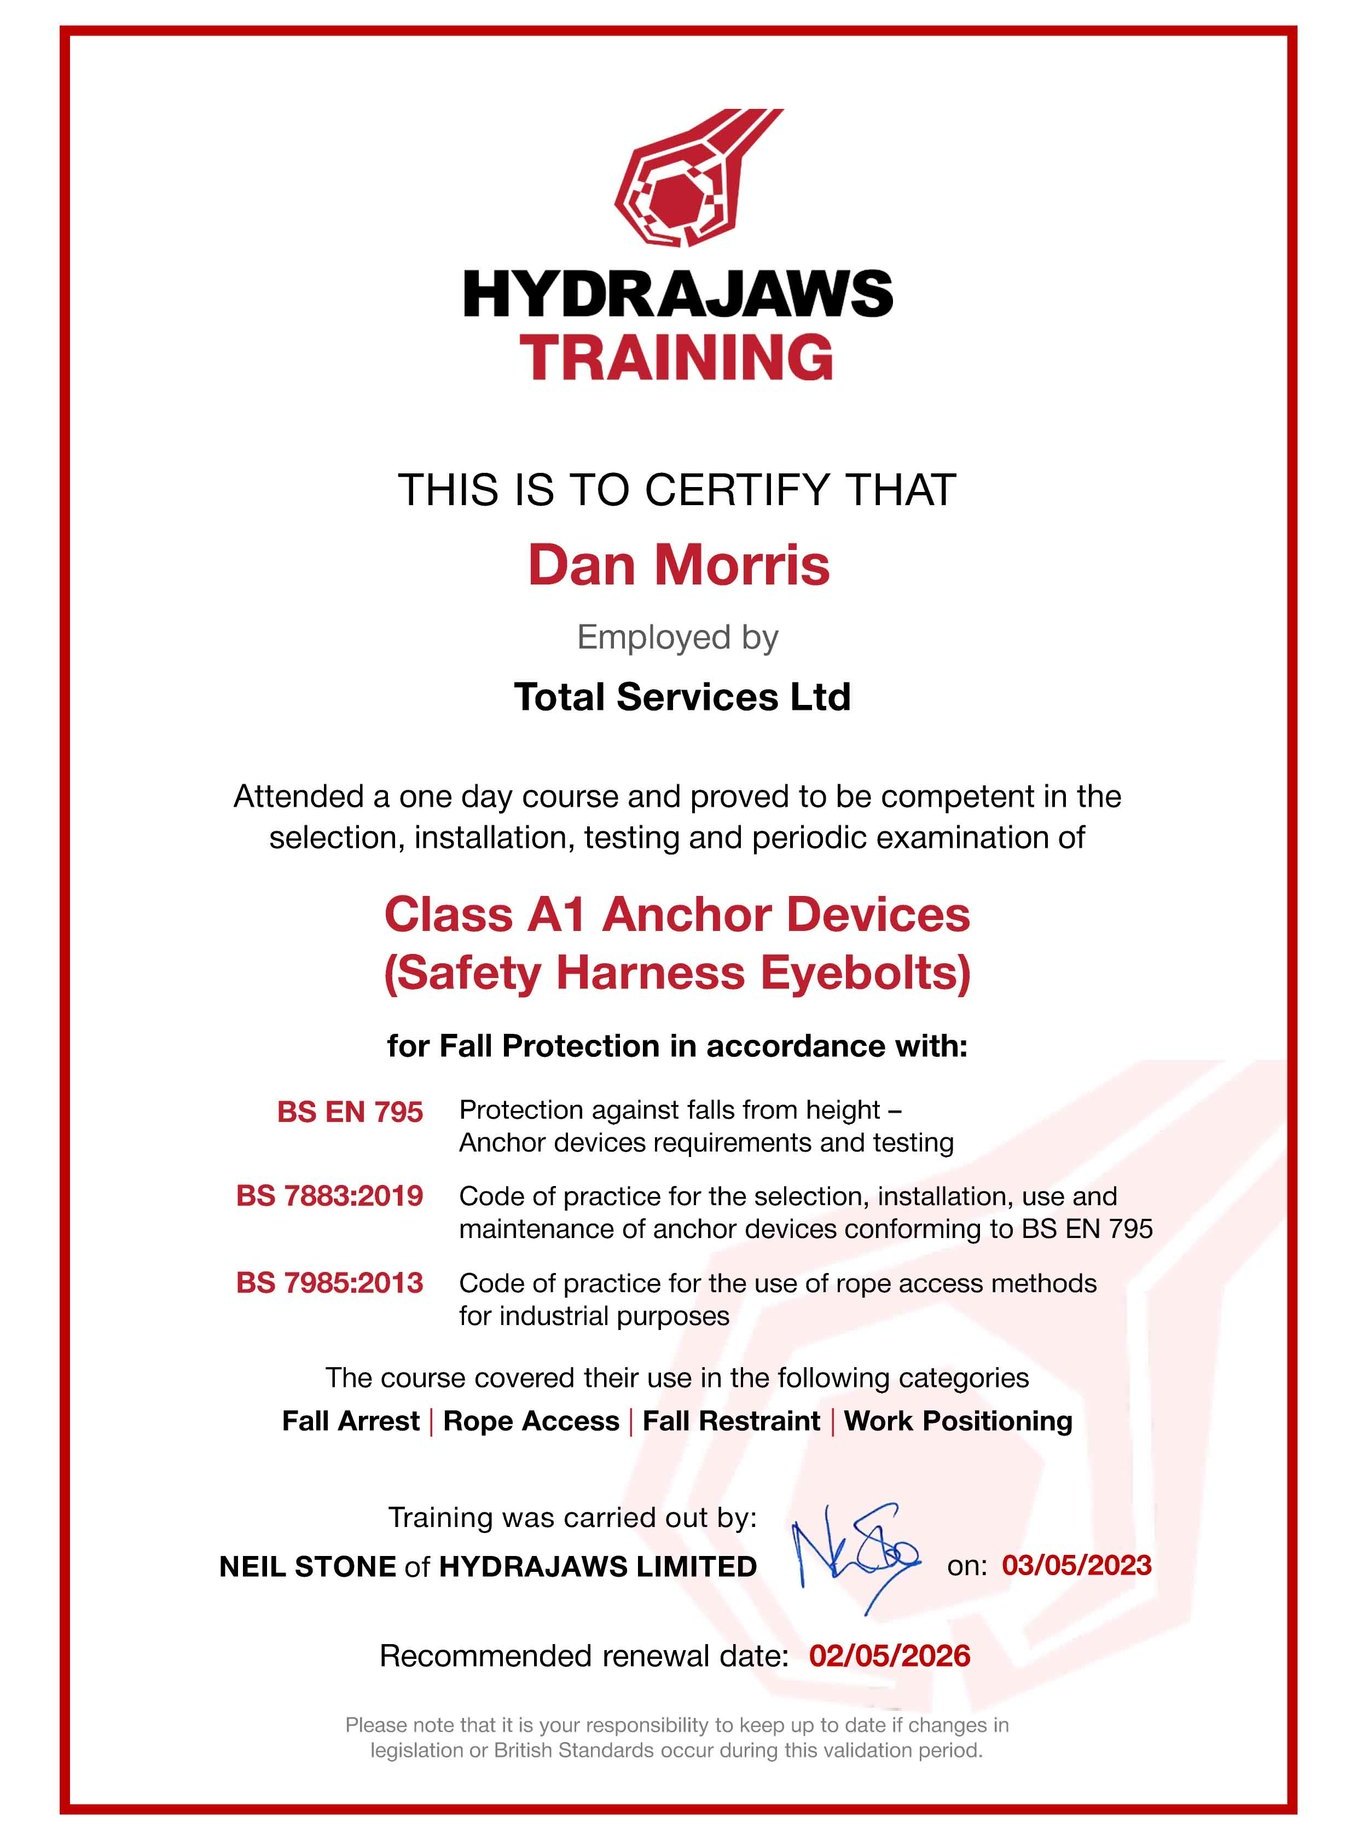 hydrajaws training certificate